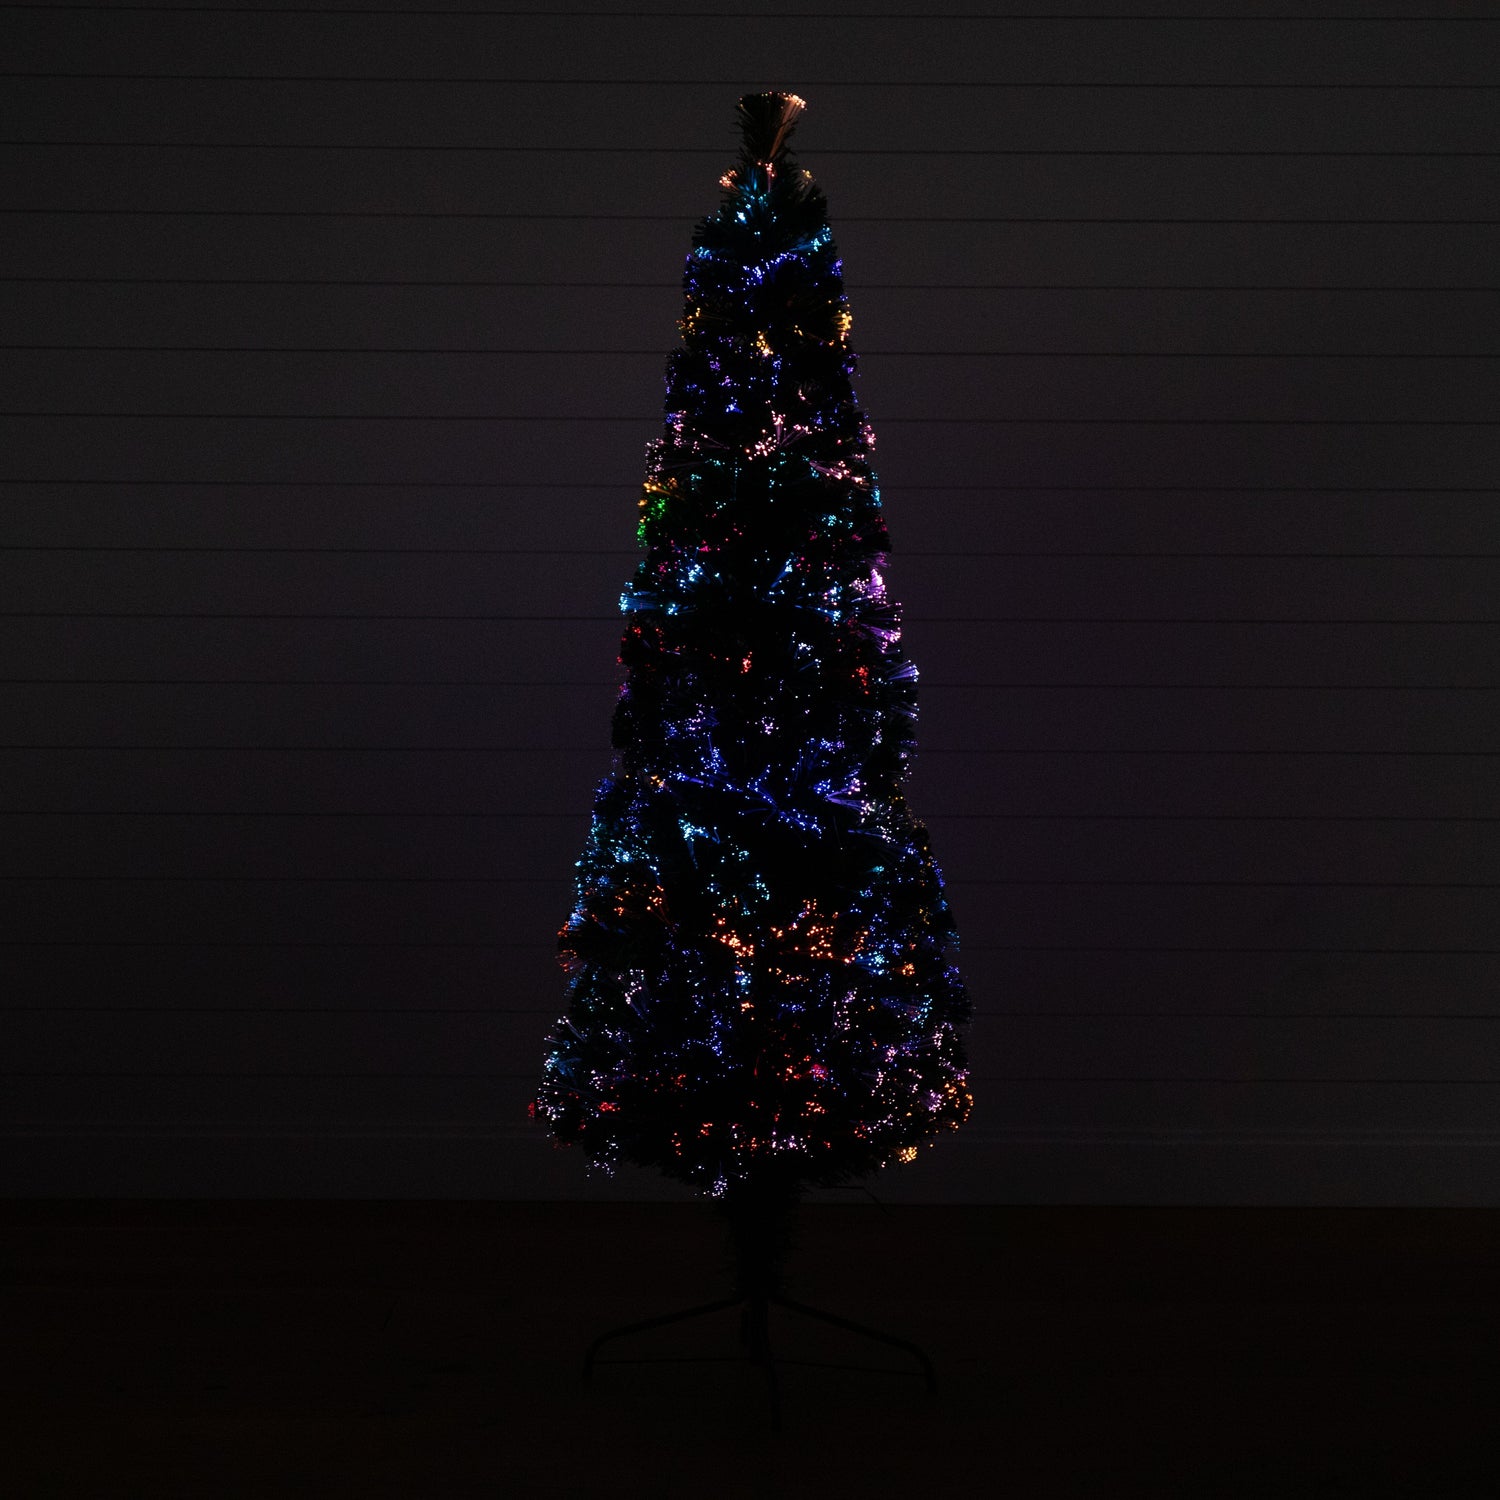 6' Slim Pre-Lit Fiber Optic Artificial Christmas Tree with 282 Colorful LED Lights